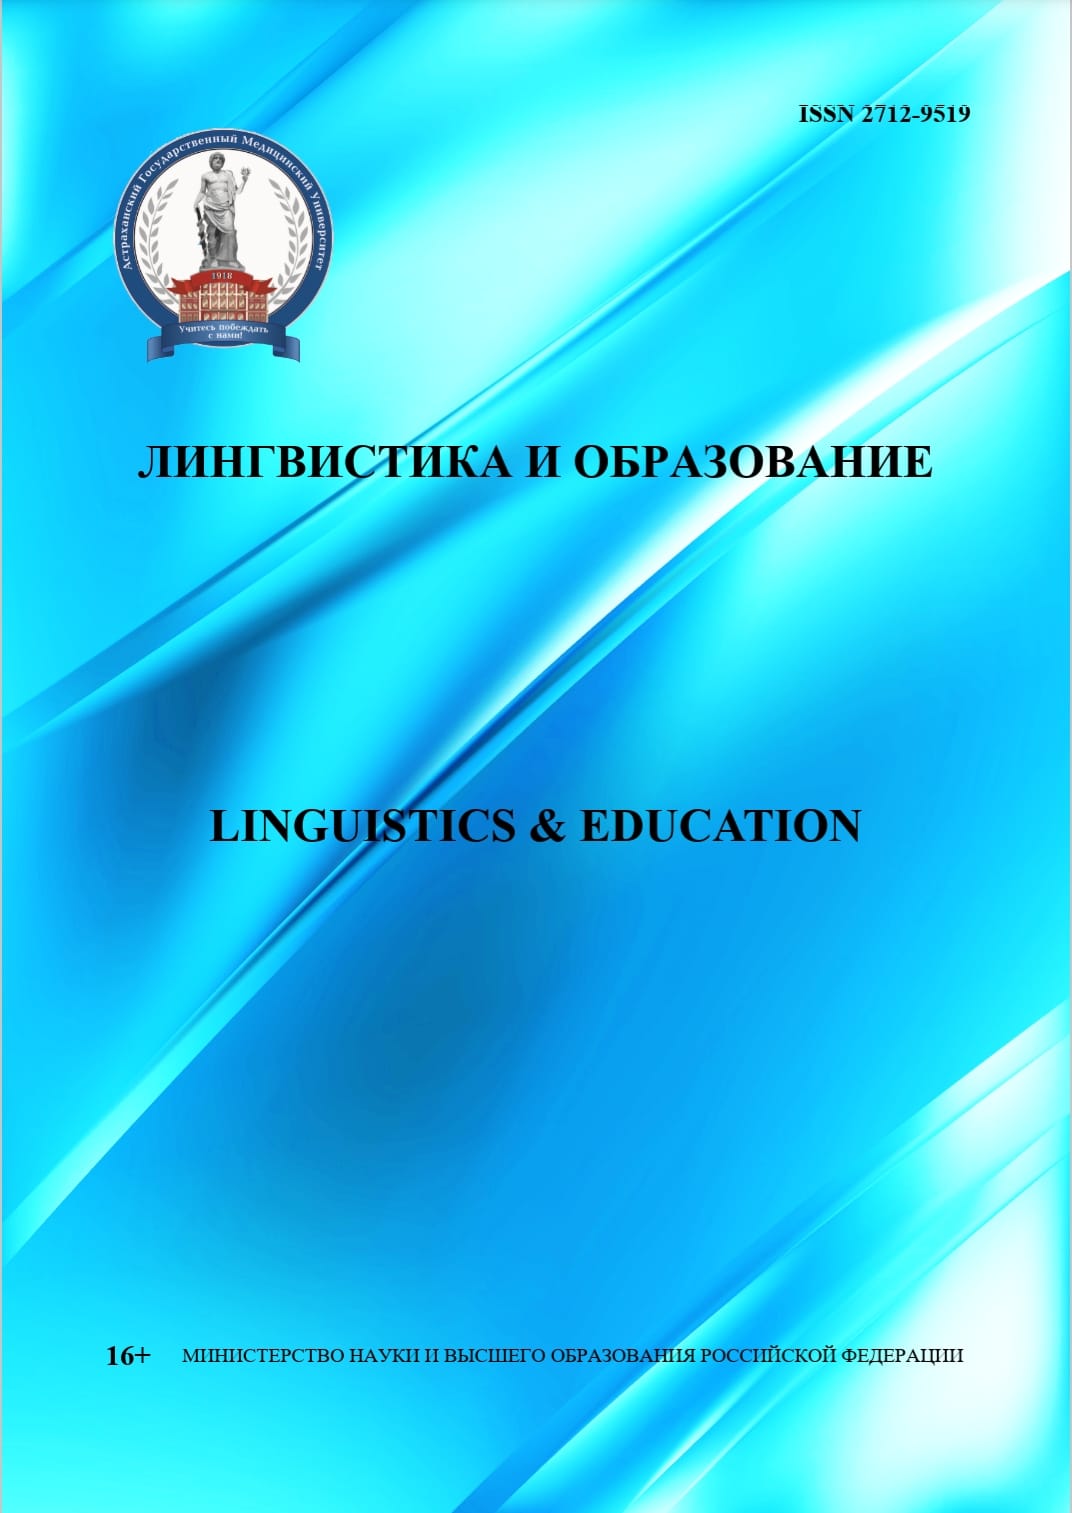             Лингвистика и образование
    